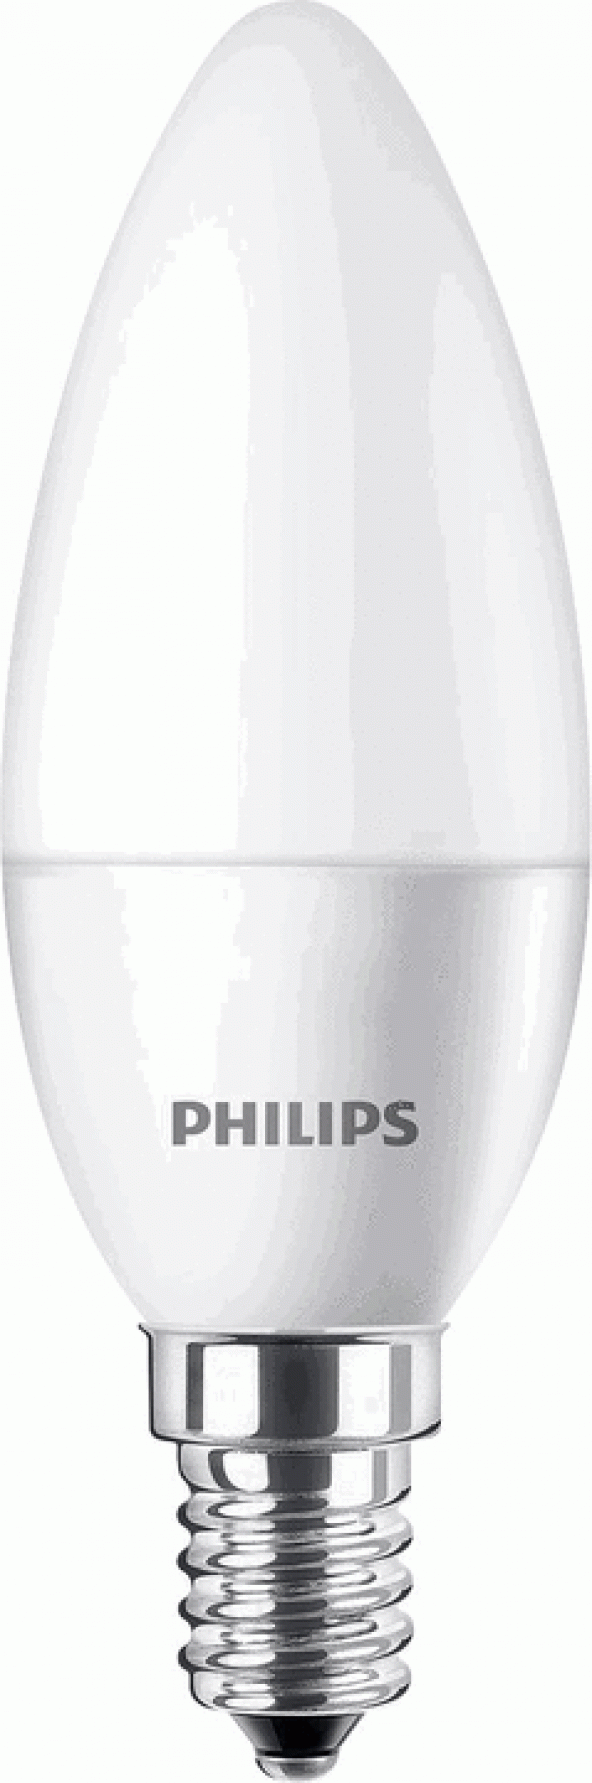 Philips Klasik Mum Led Ampul E14 4.3 W 470 LM 2700 K - SARI IŞIK